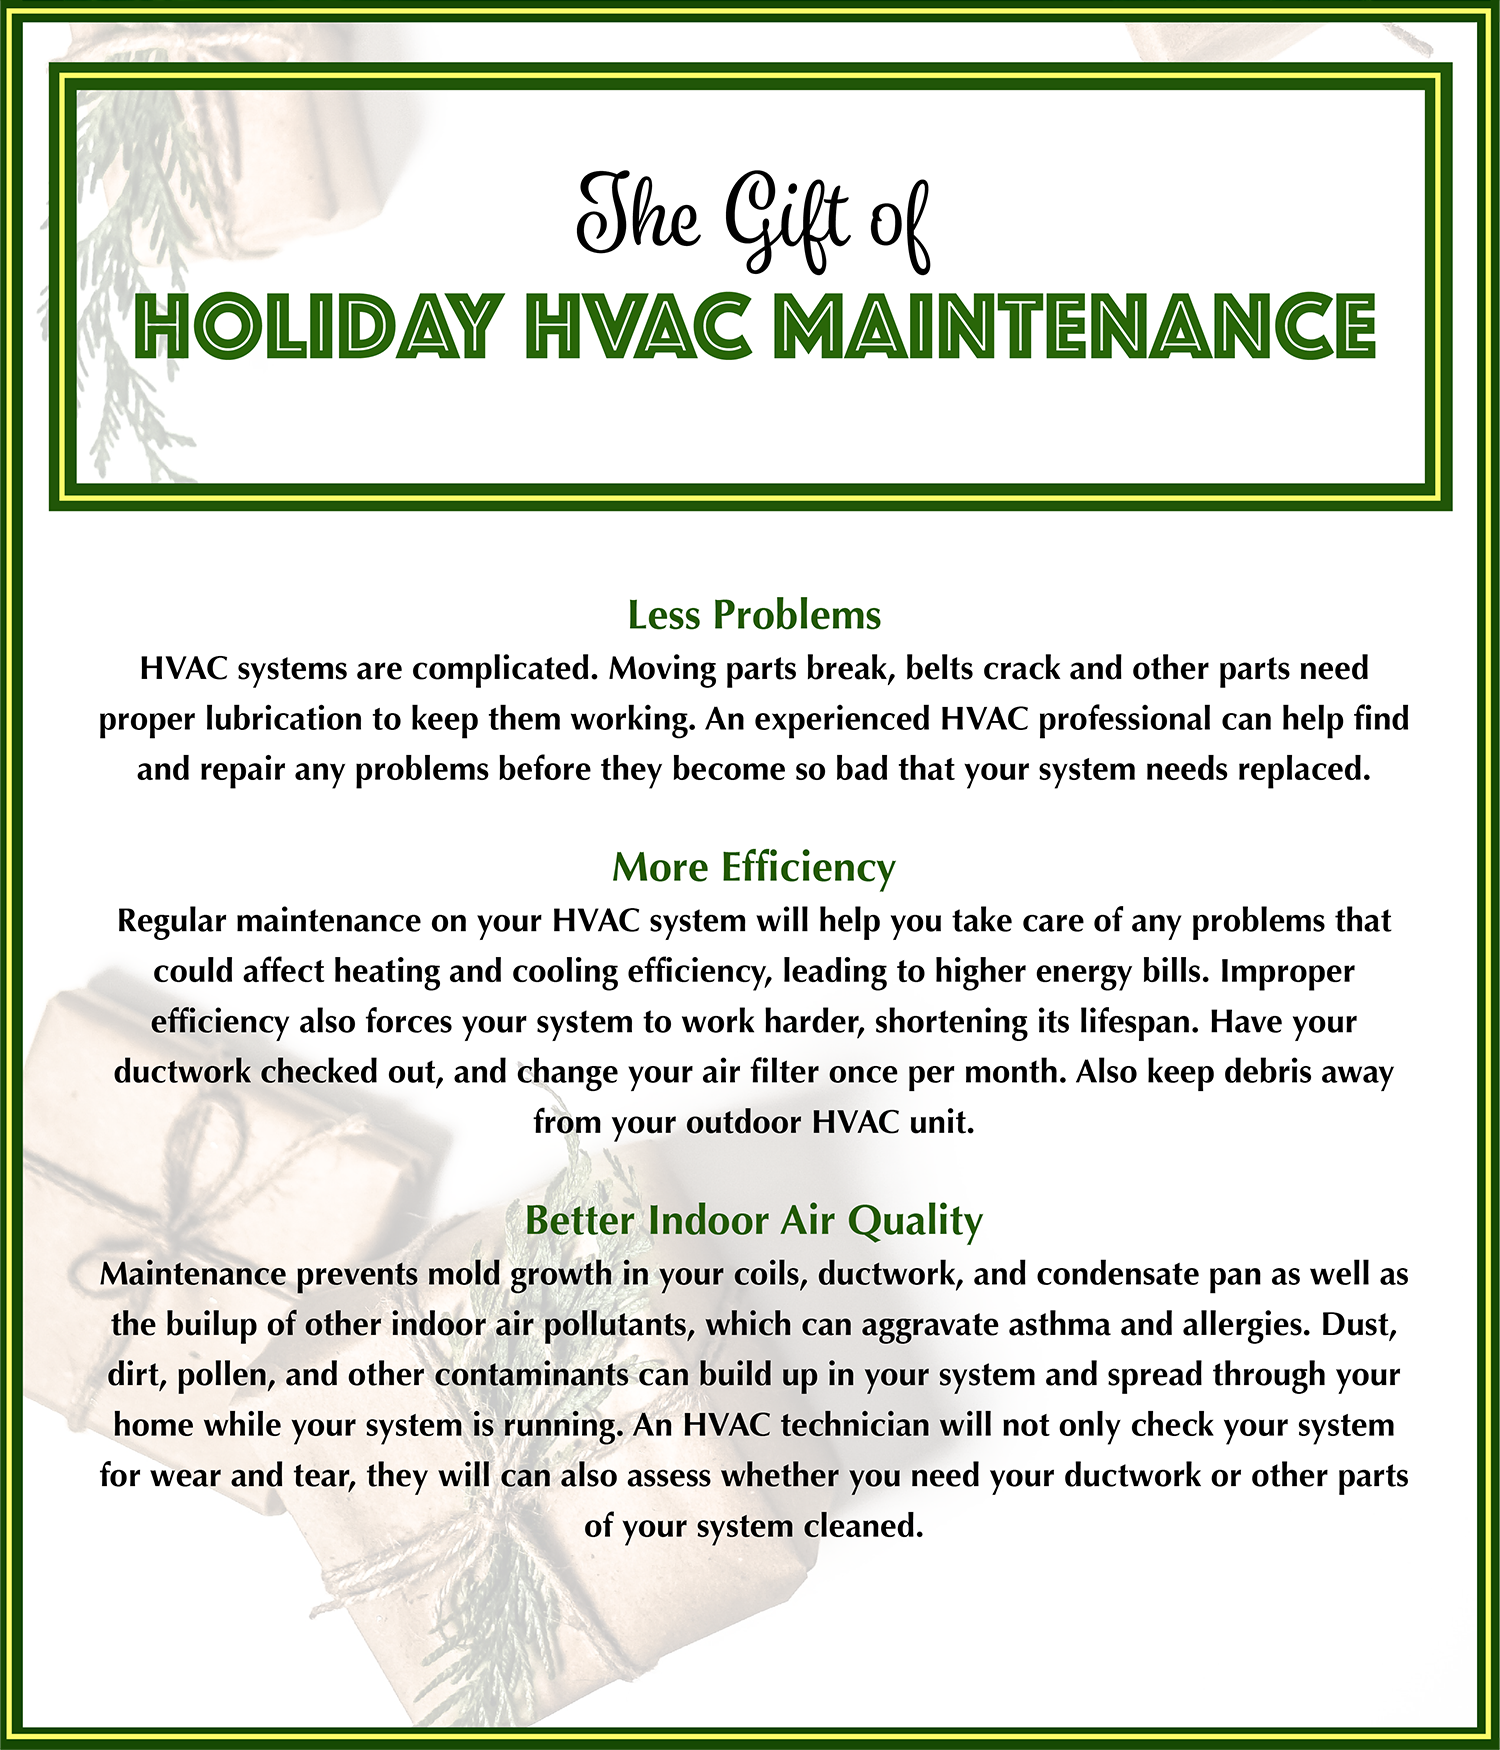 Holiday HVAC Maintenance